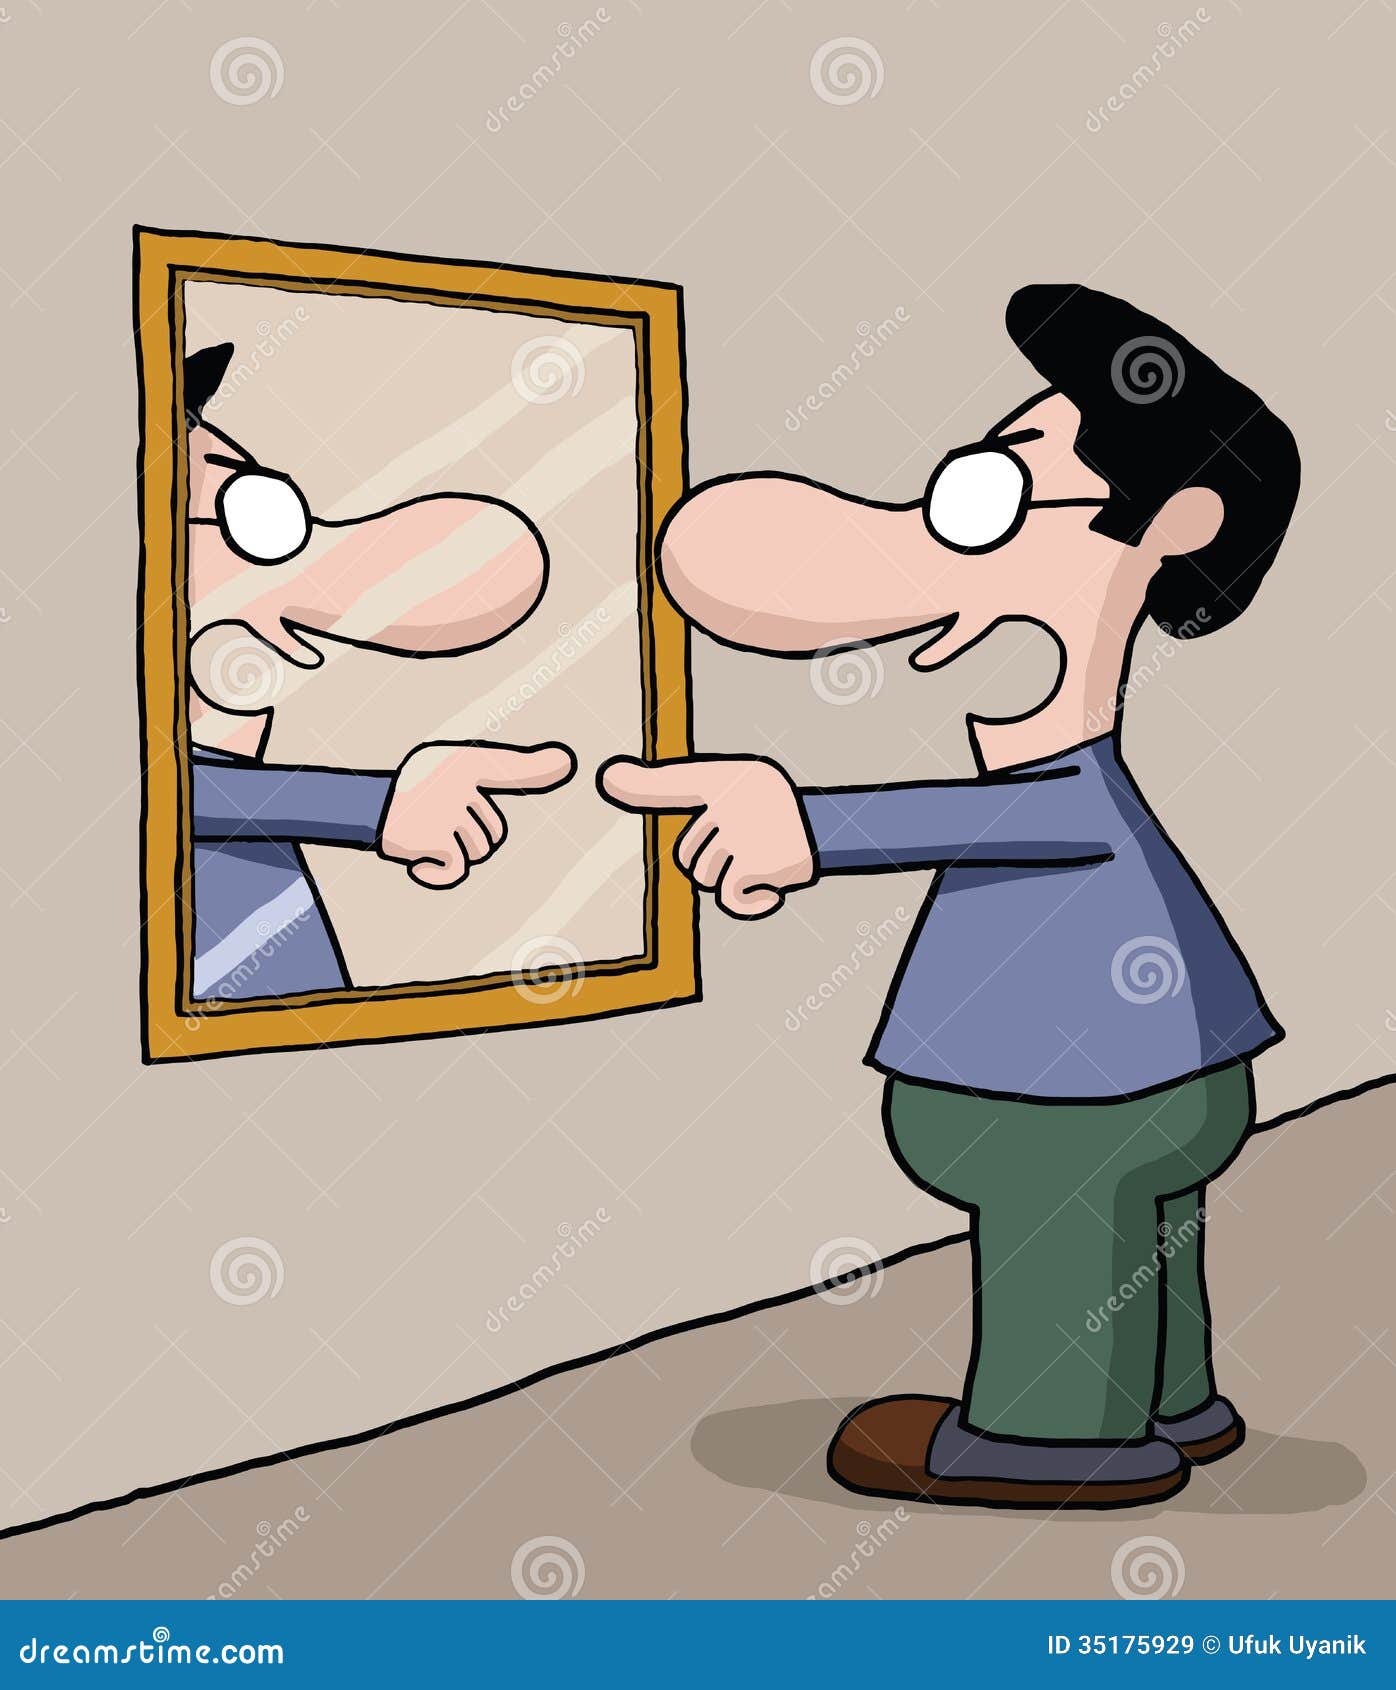 talking-to-mirror-man-himself-35175929.jpg